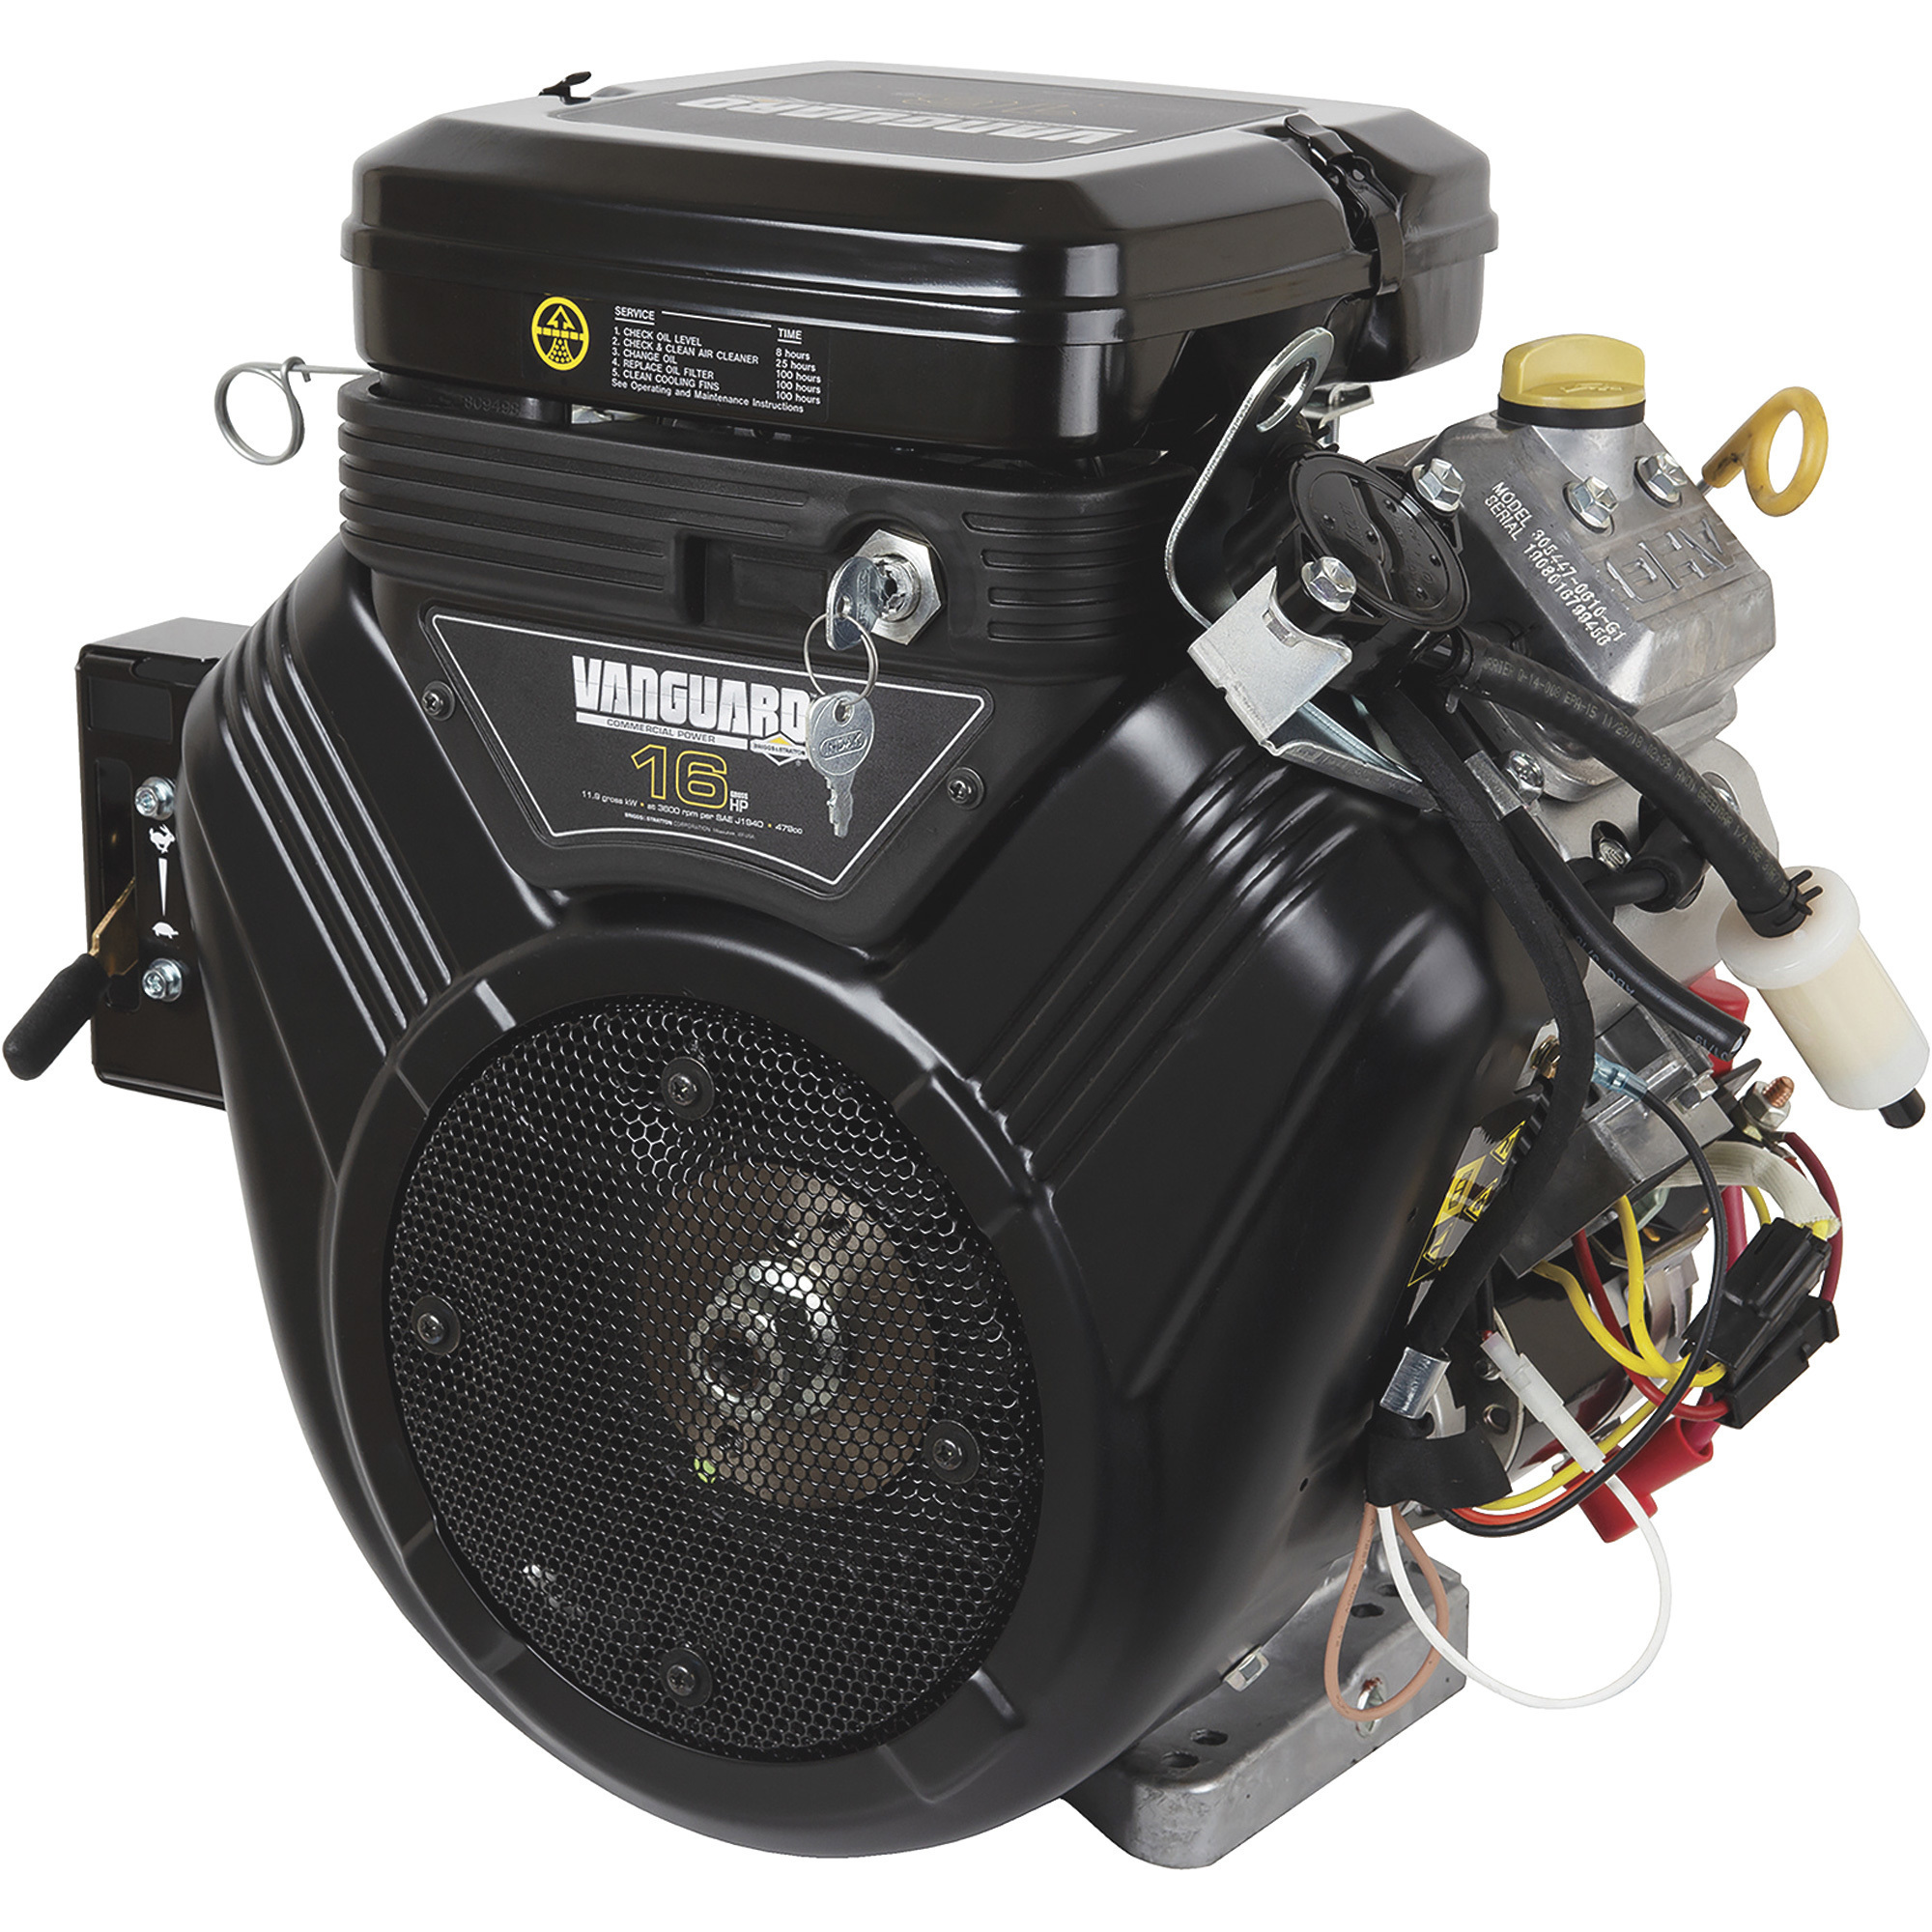 Vanguard V-Twin 479cc Horizontal Engine with Electric Start — 16 HP, Model - Briggs & Stratton 305447-0610-G1